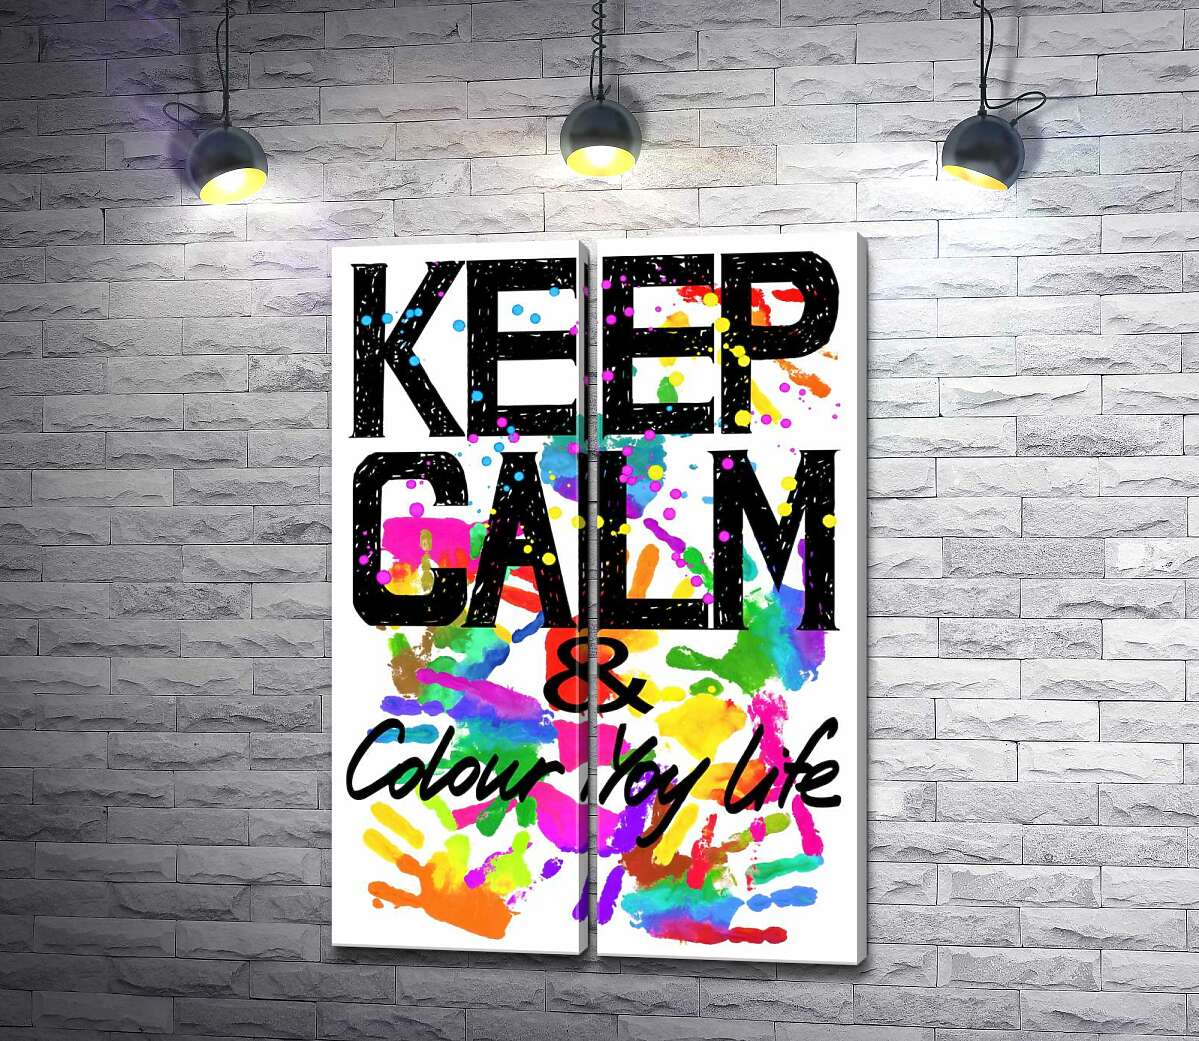 модульна картина Напис "keep calm and colour your life" на фоні відбитків рук